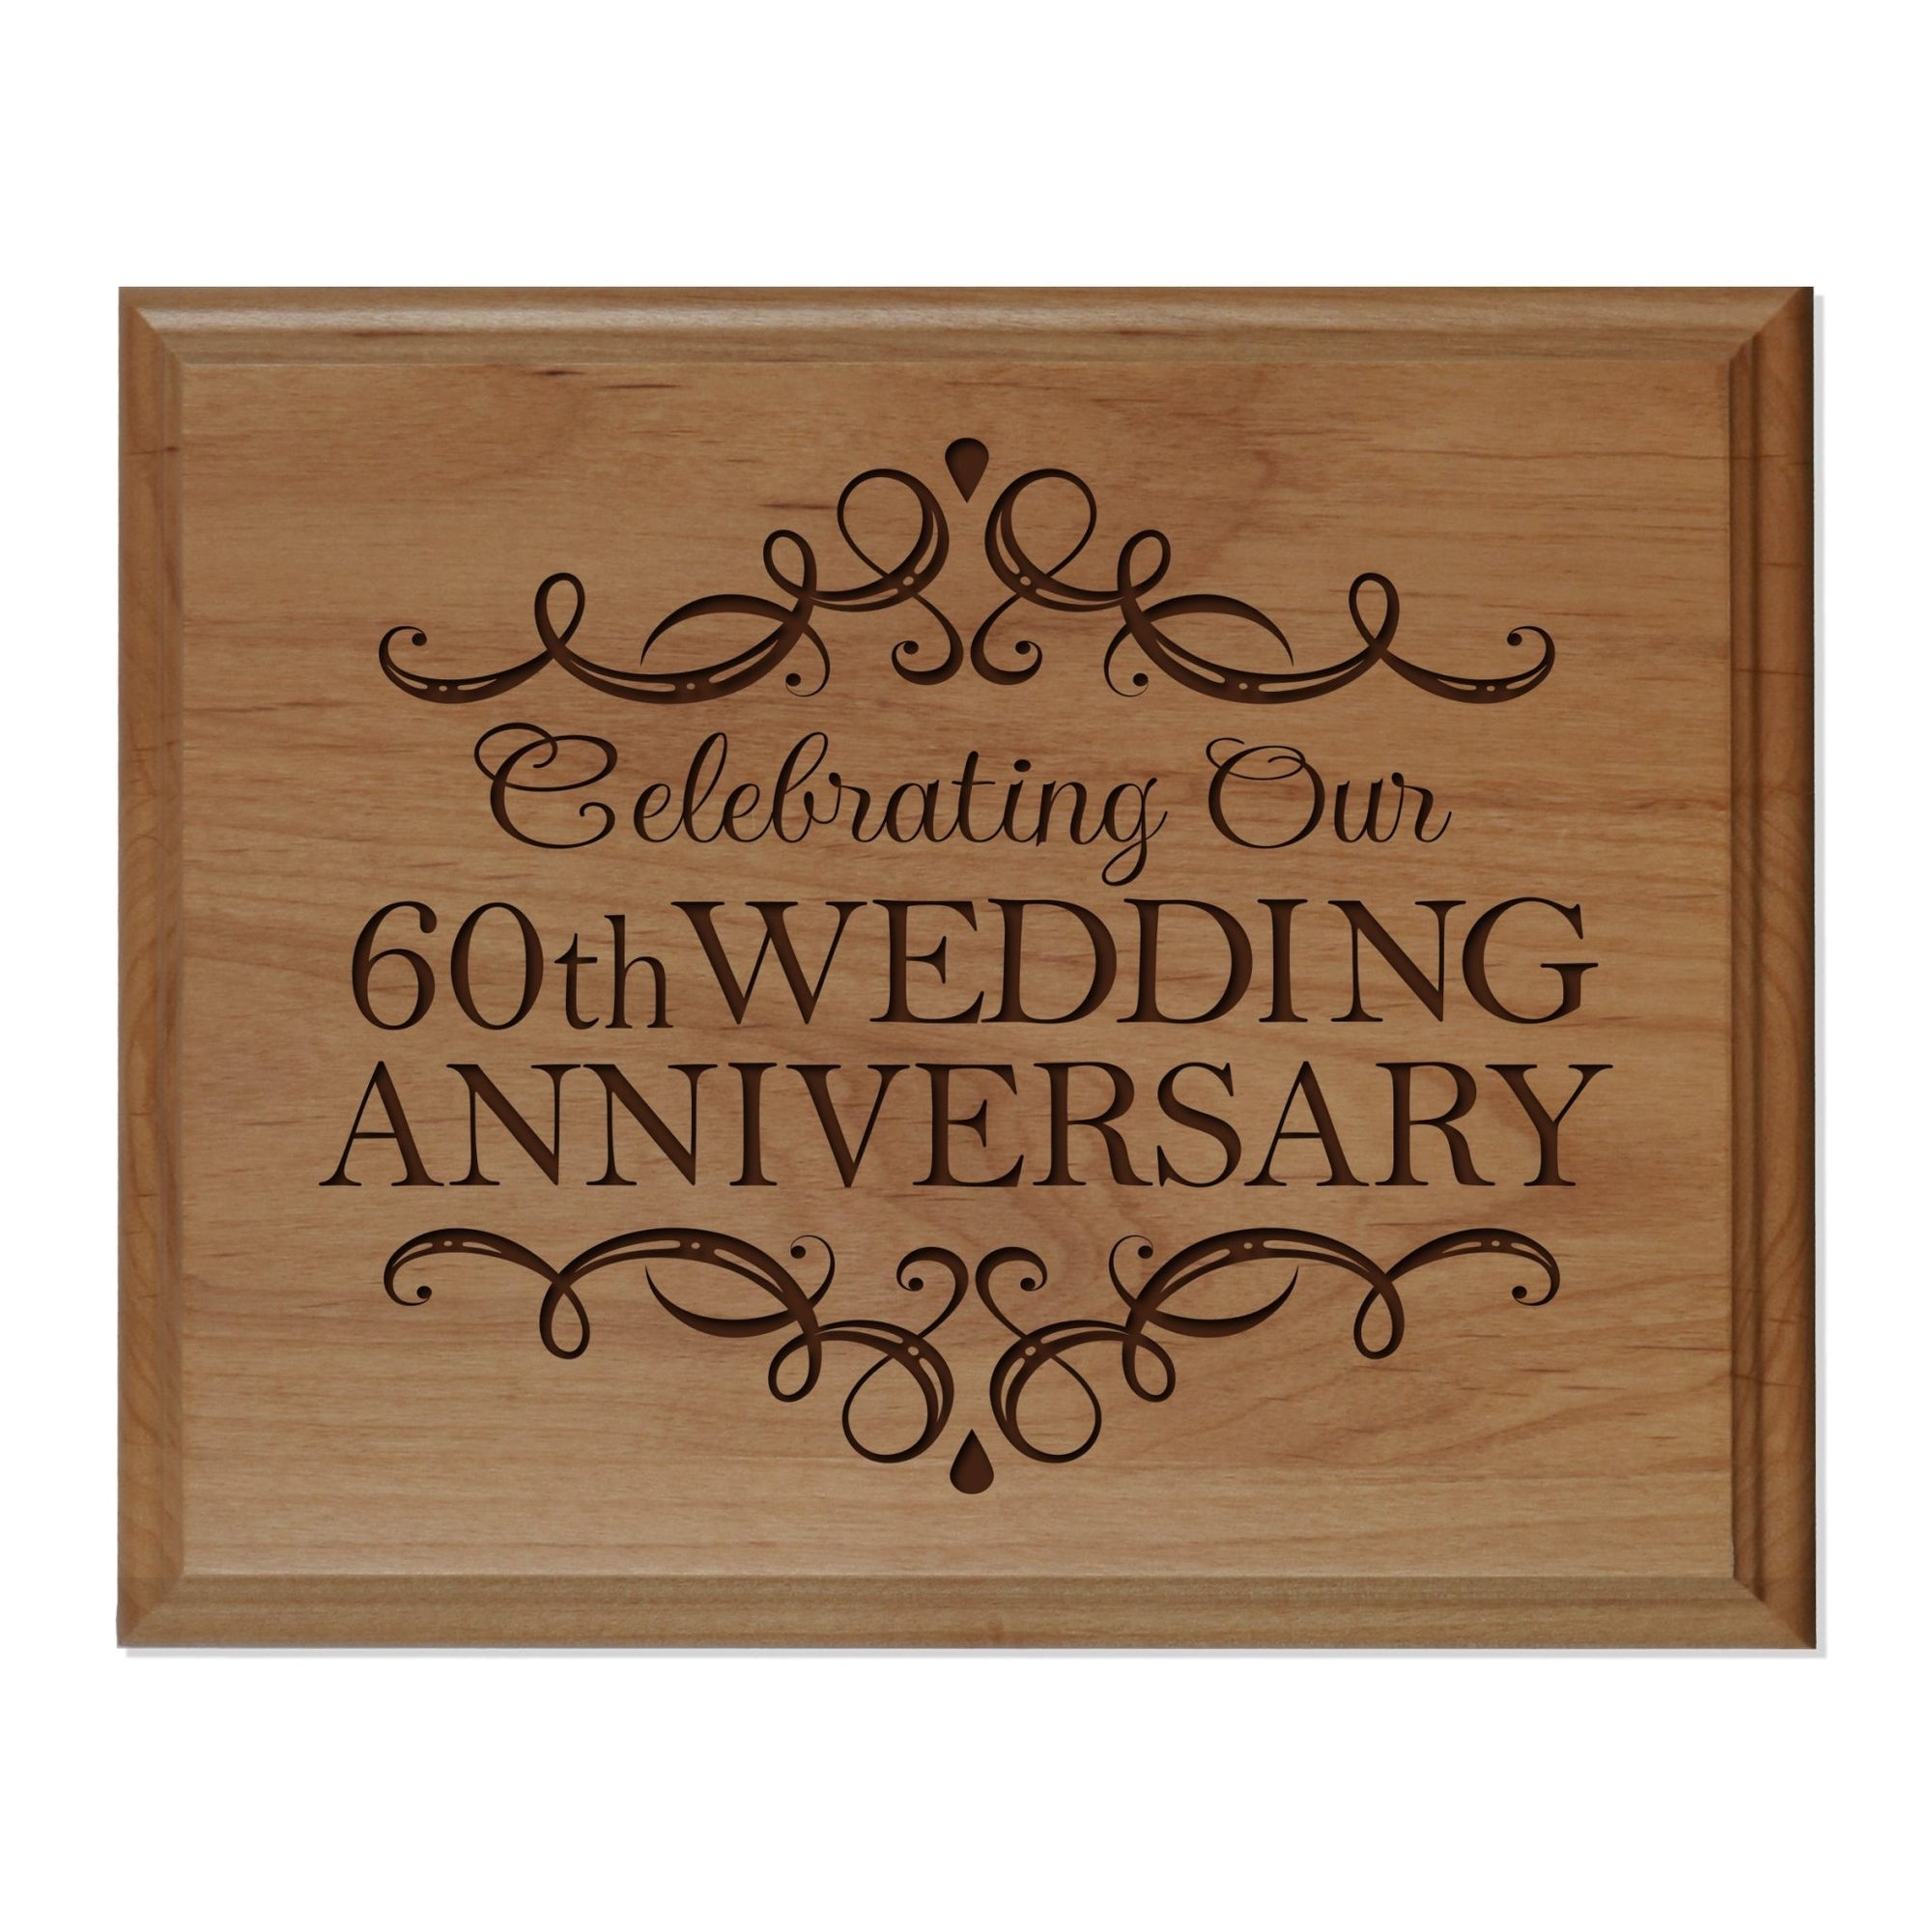 60th Wedding Anniversary Wall Plaque - Celebrating - LifeSong Milestones